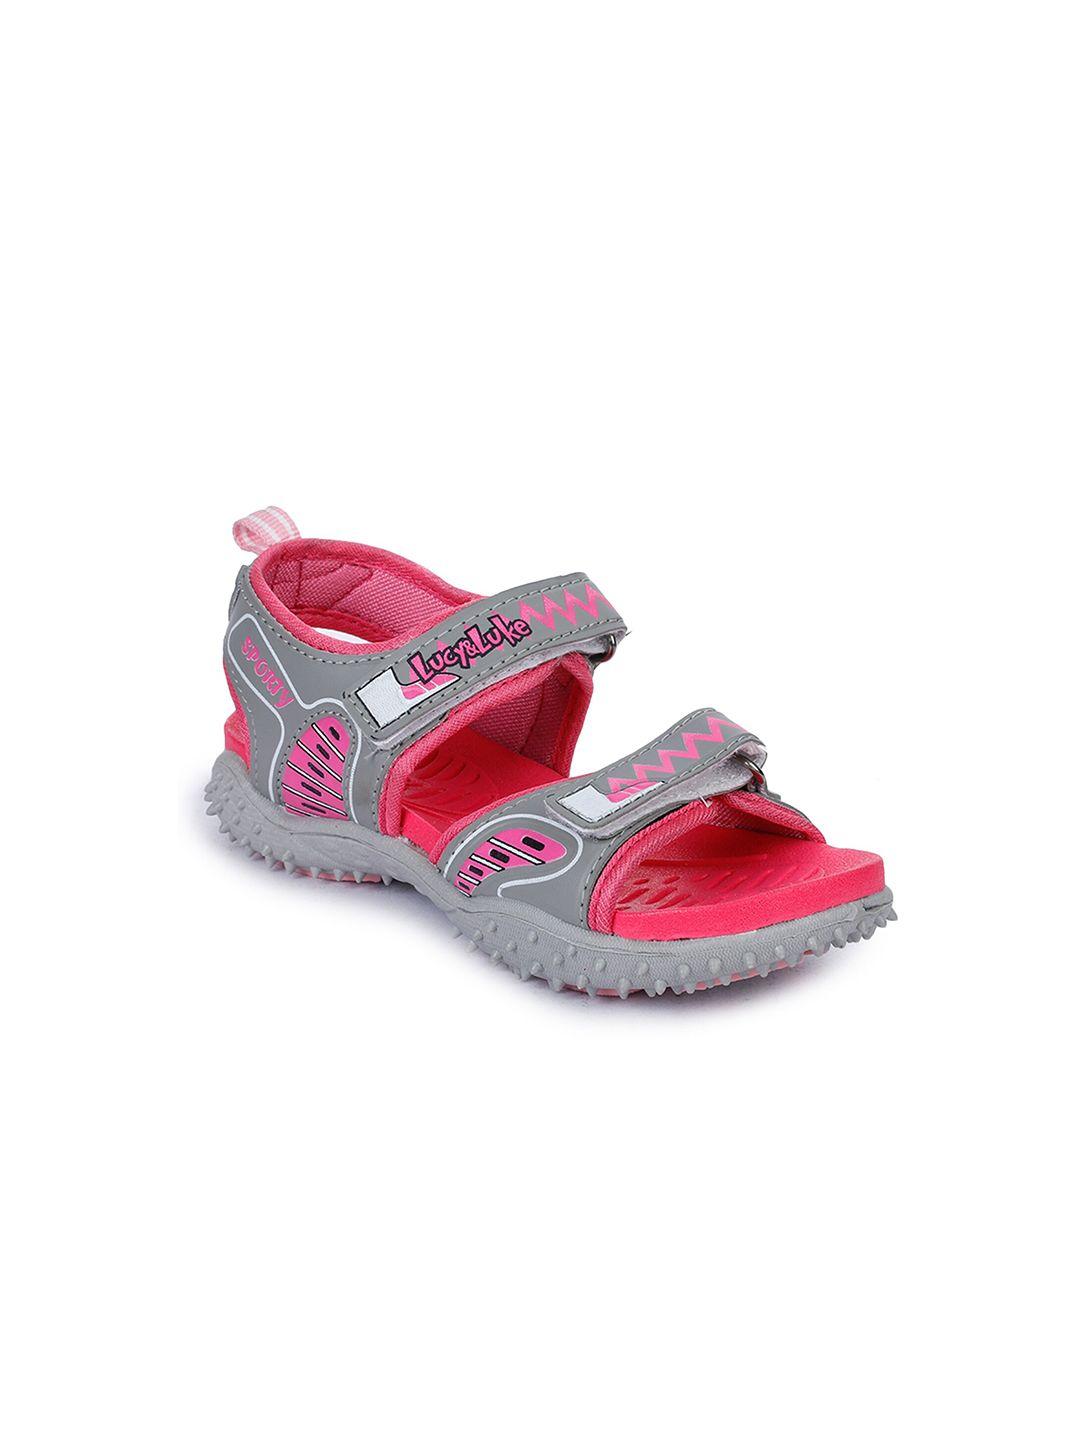 liberty kids pink & grey printed sports sandals